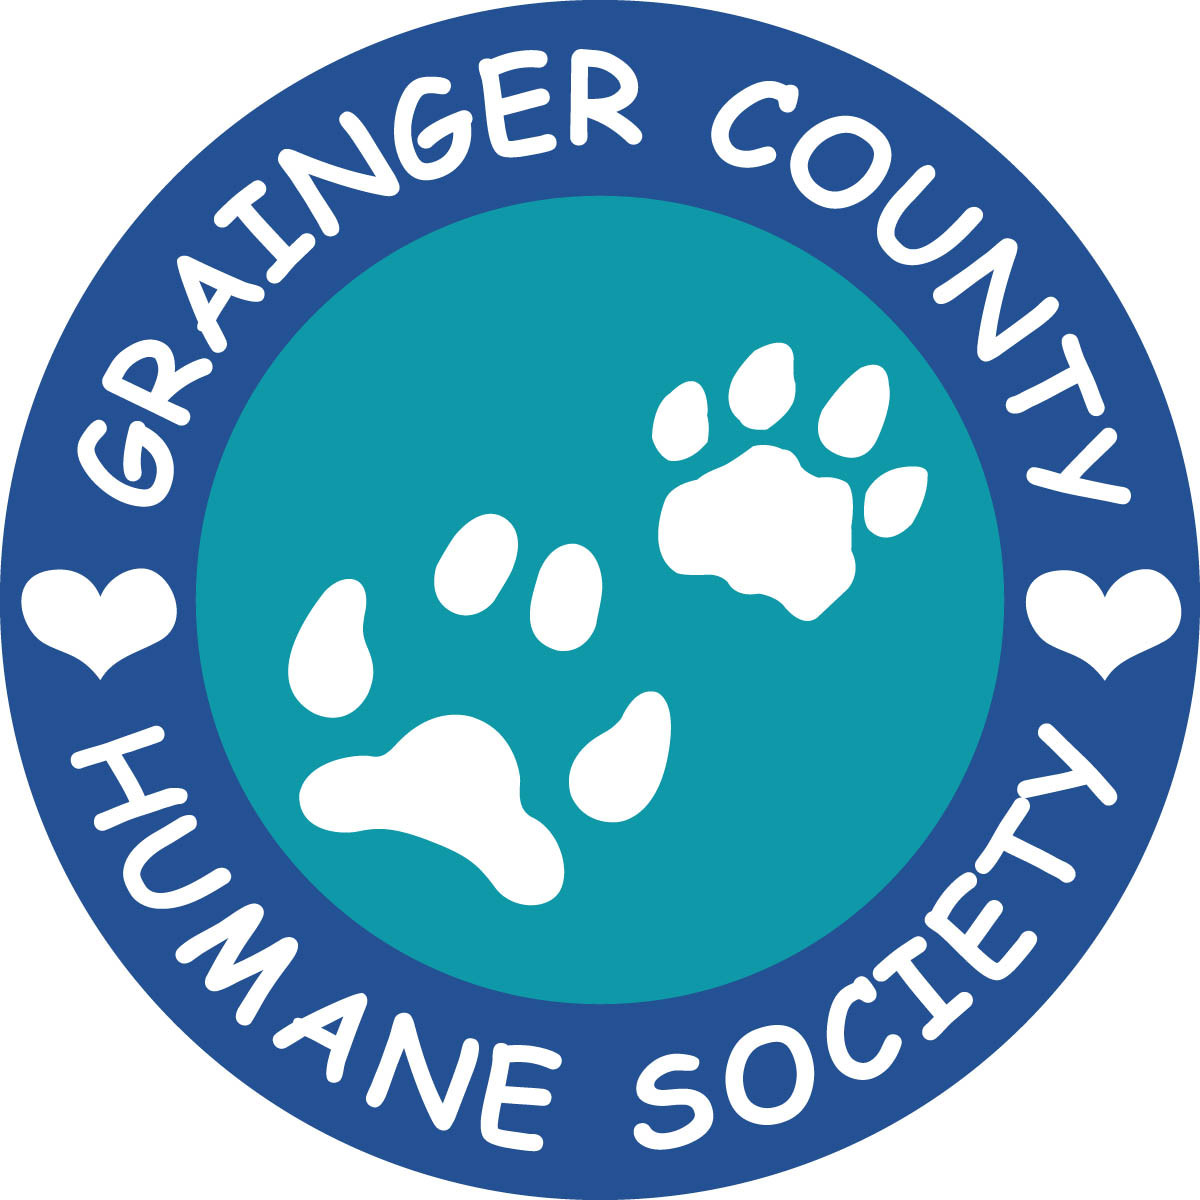 Grainger County Humane Society